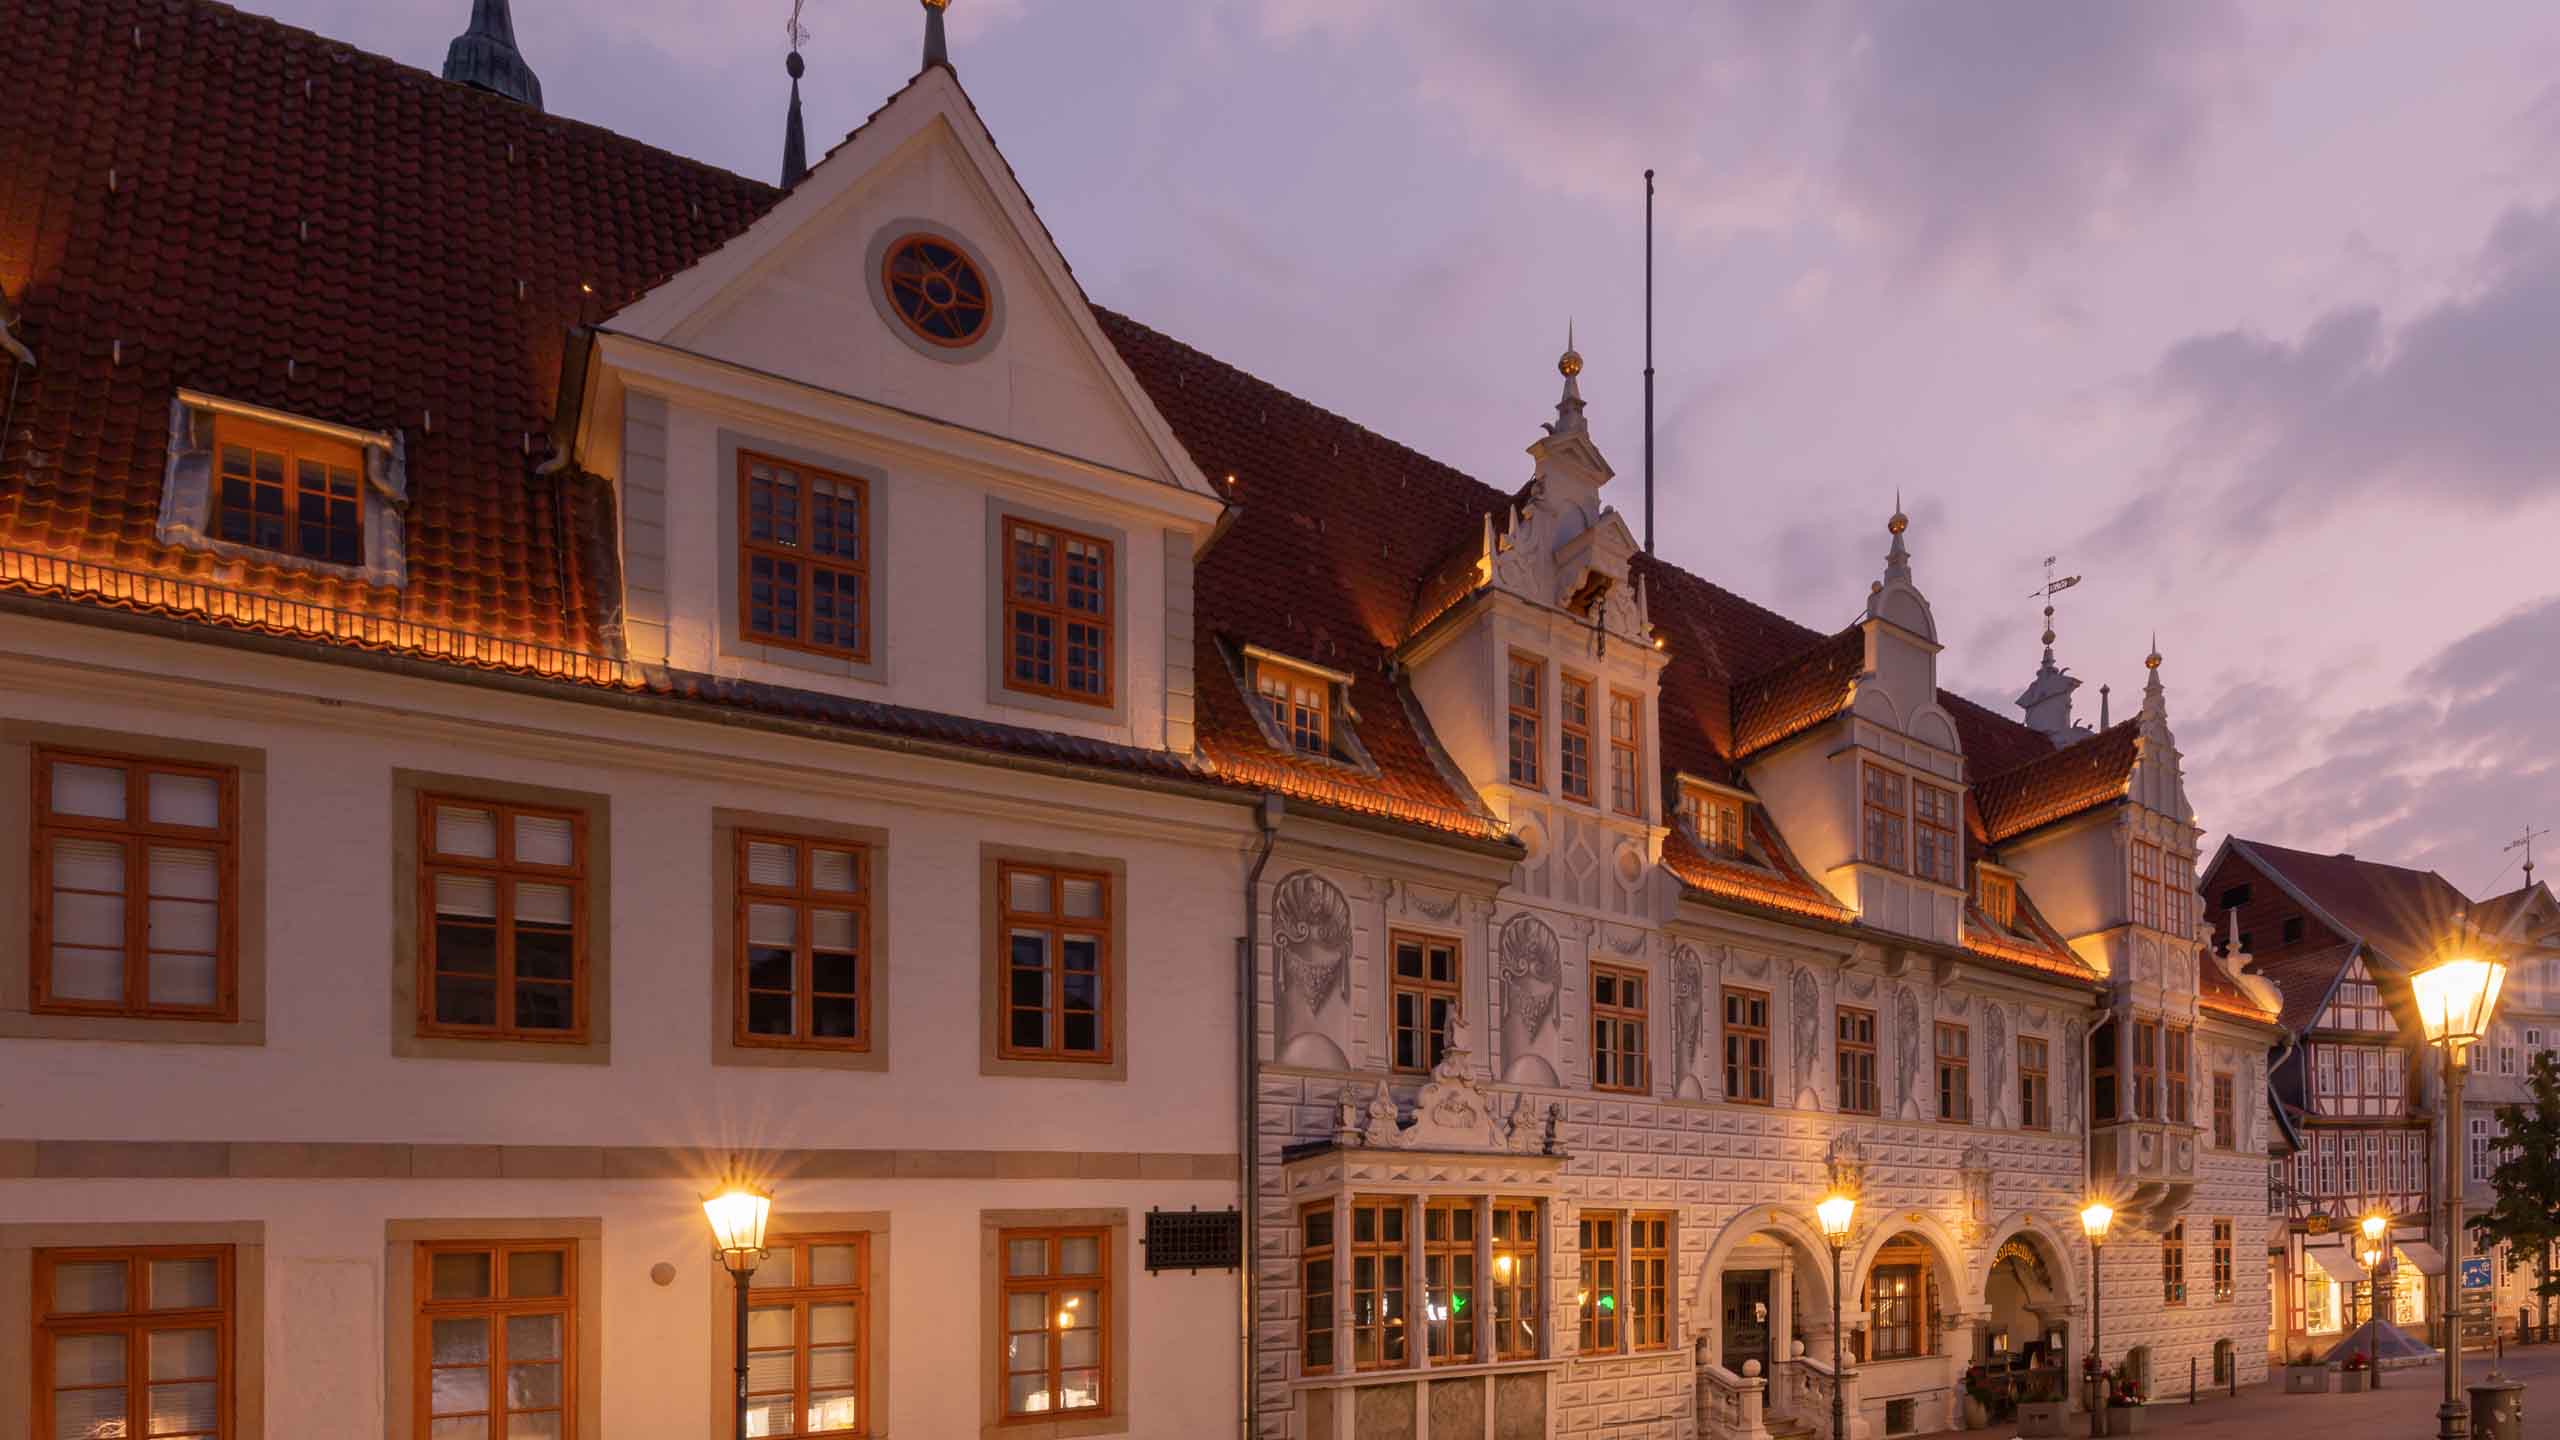 Altes Rathaus in Celle am Abend